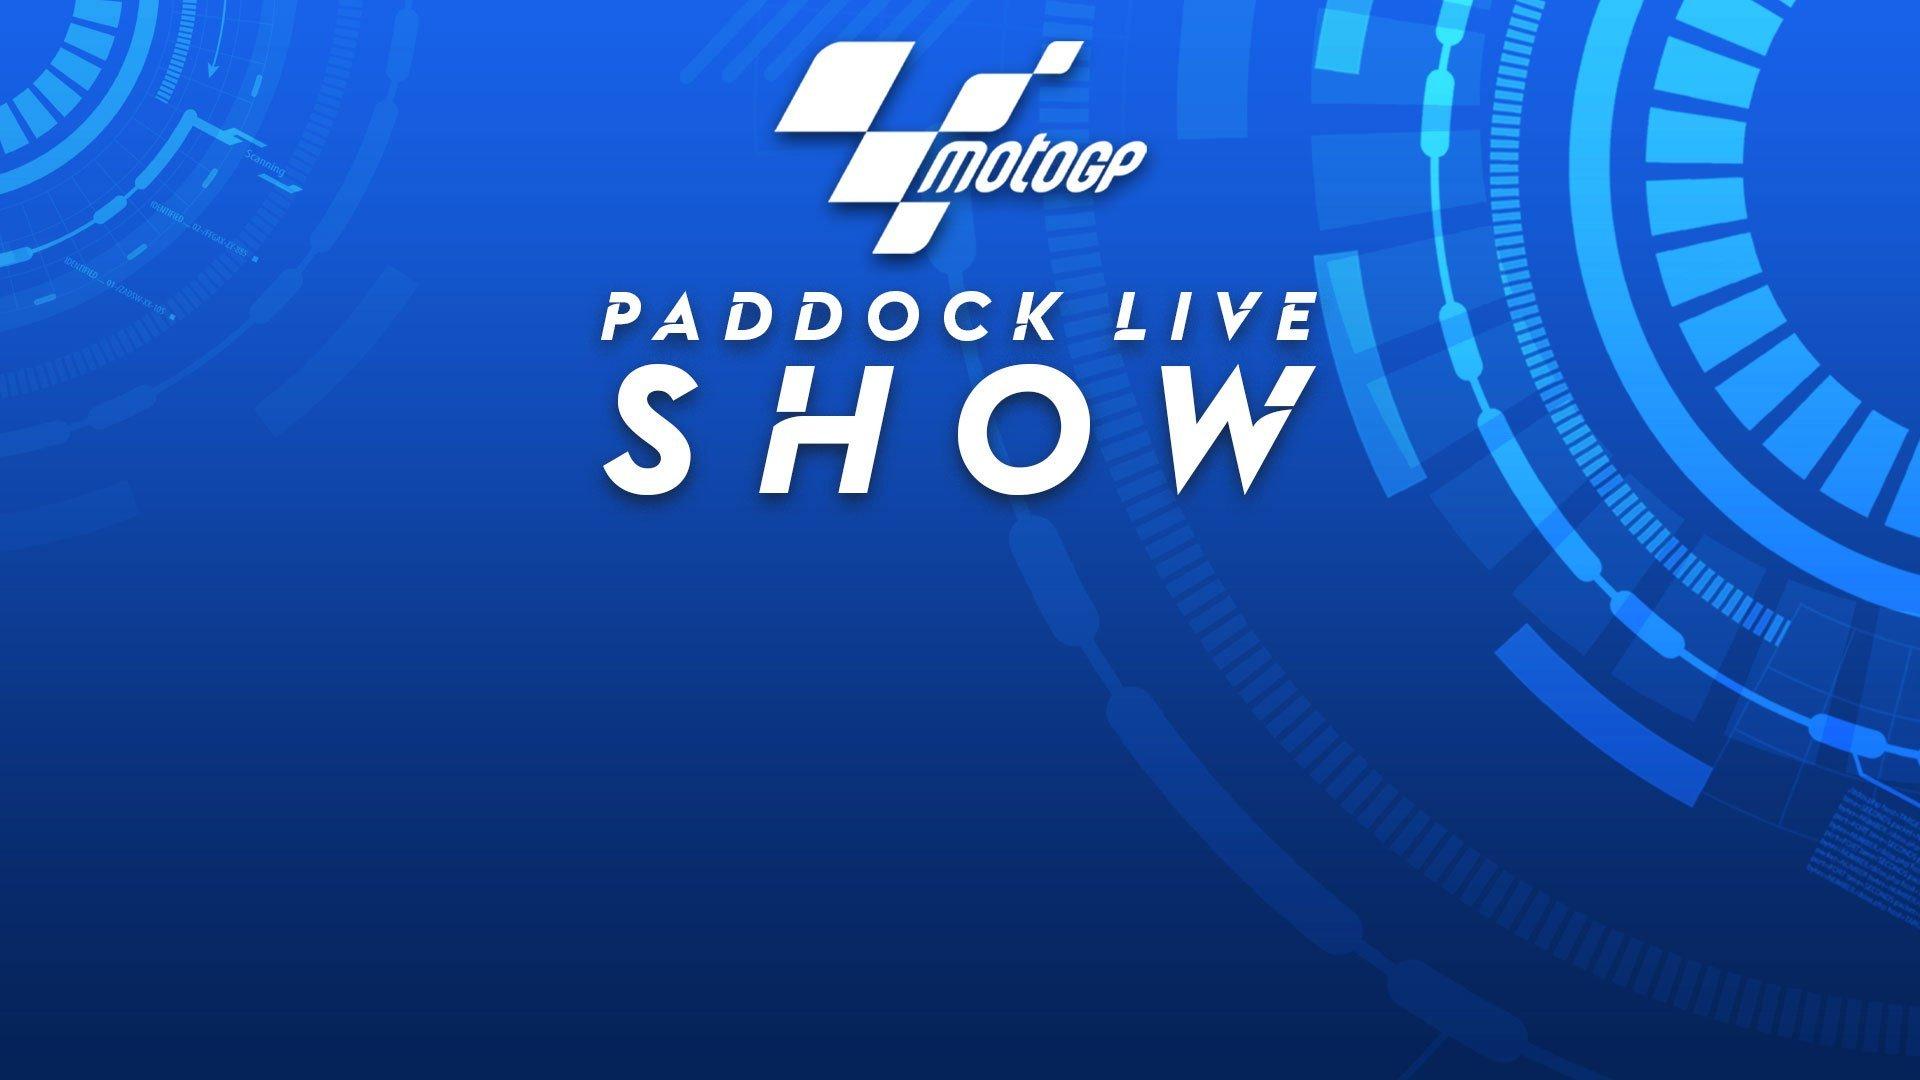 Paddock Live Show